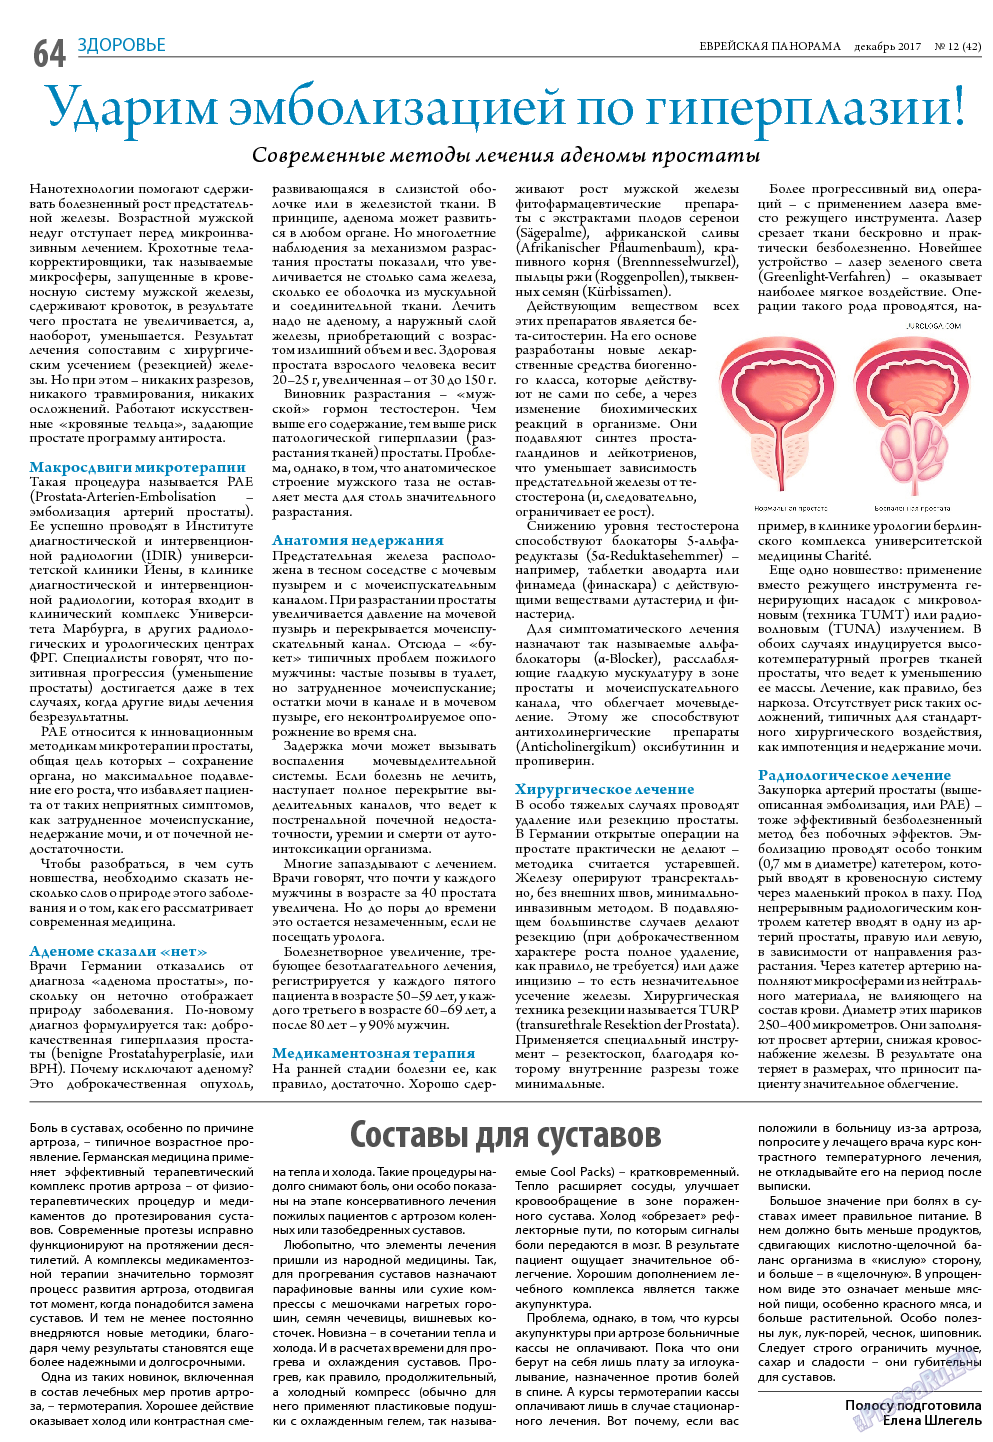 Еврейская панорама, газета. 2017 №12 стр.64